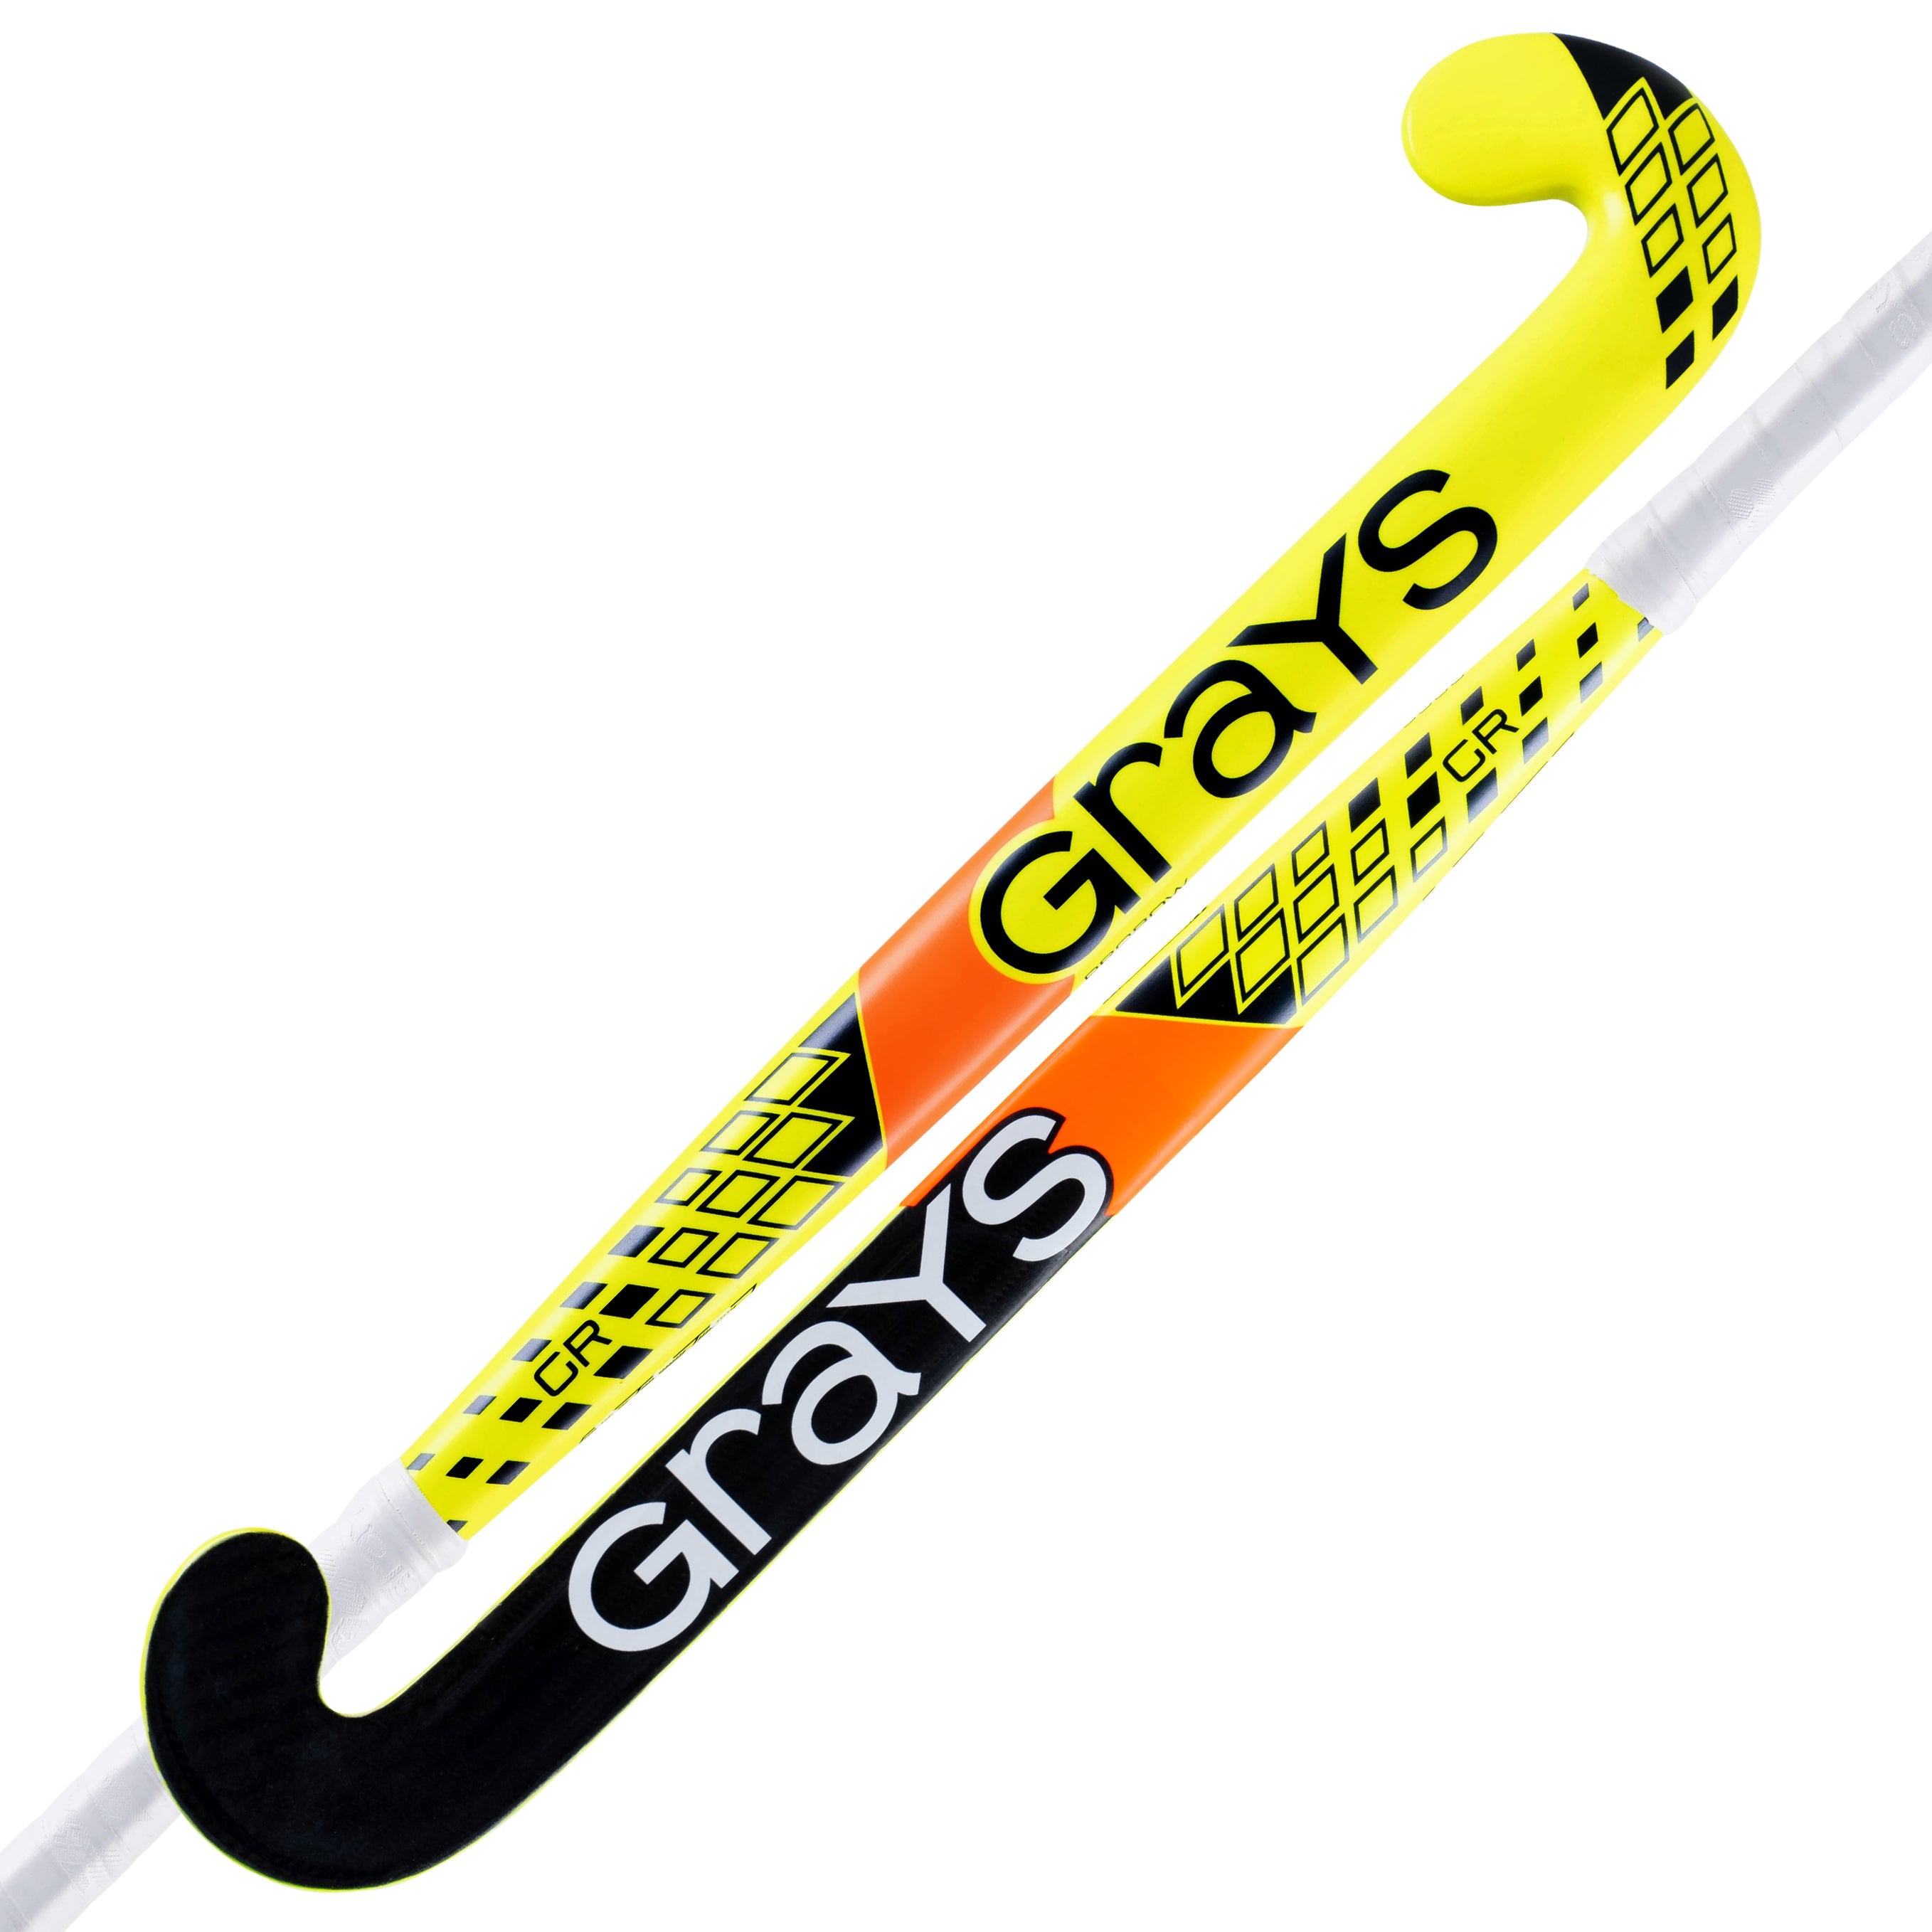 GR9000 Probow composite hockeystick